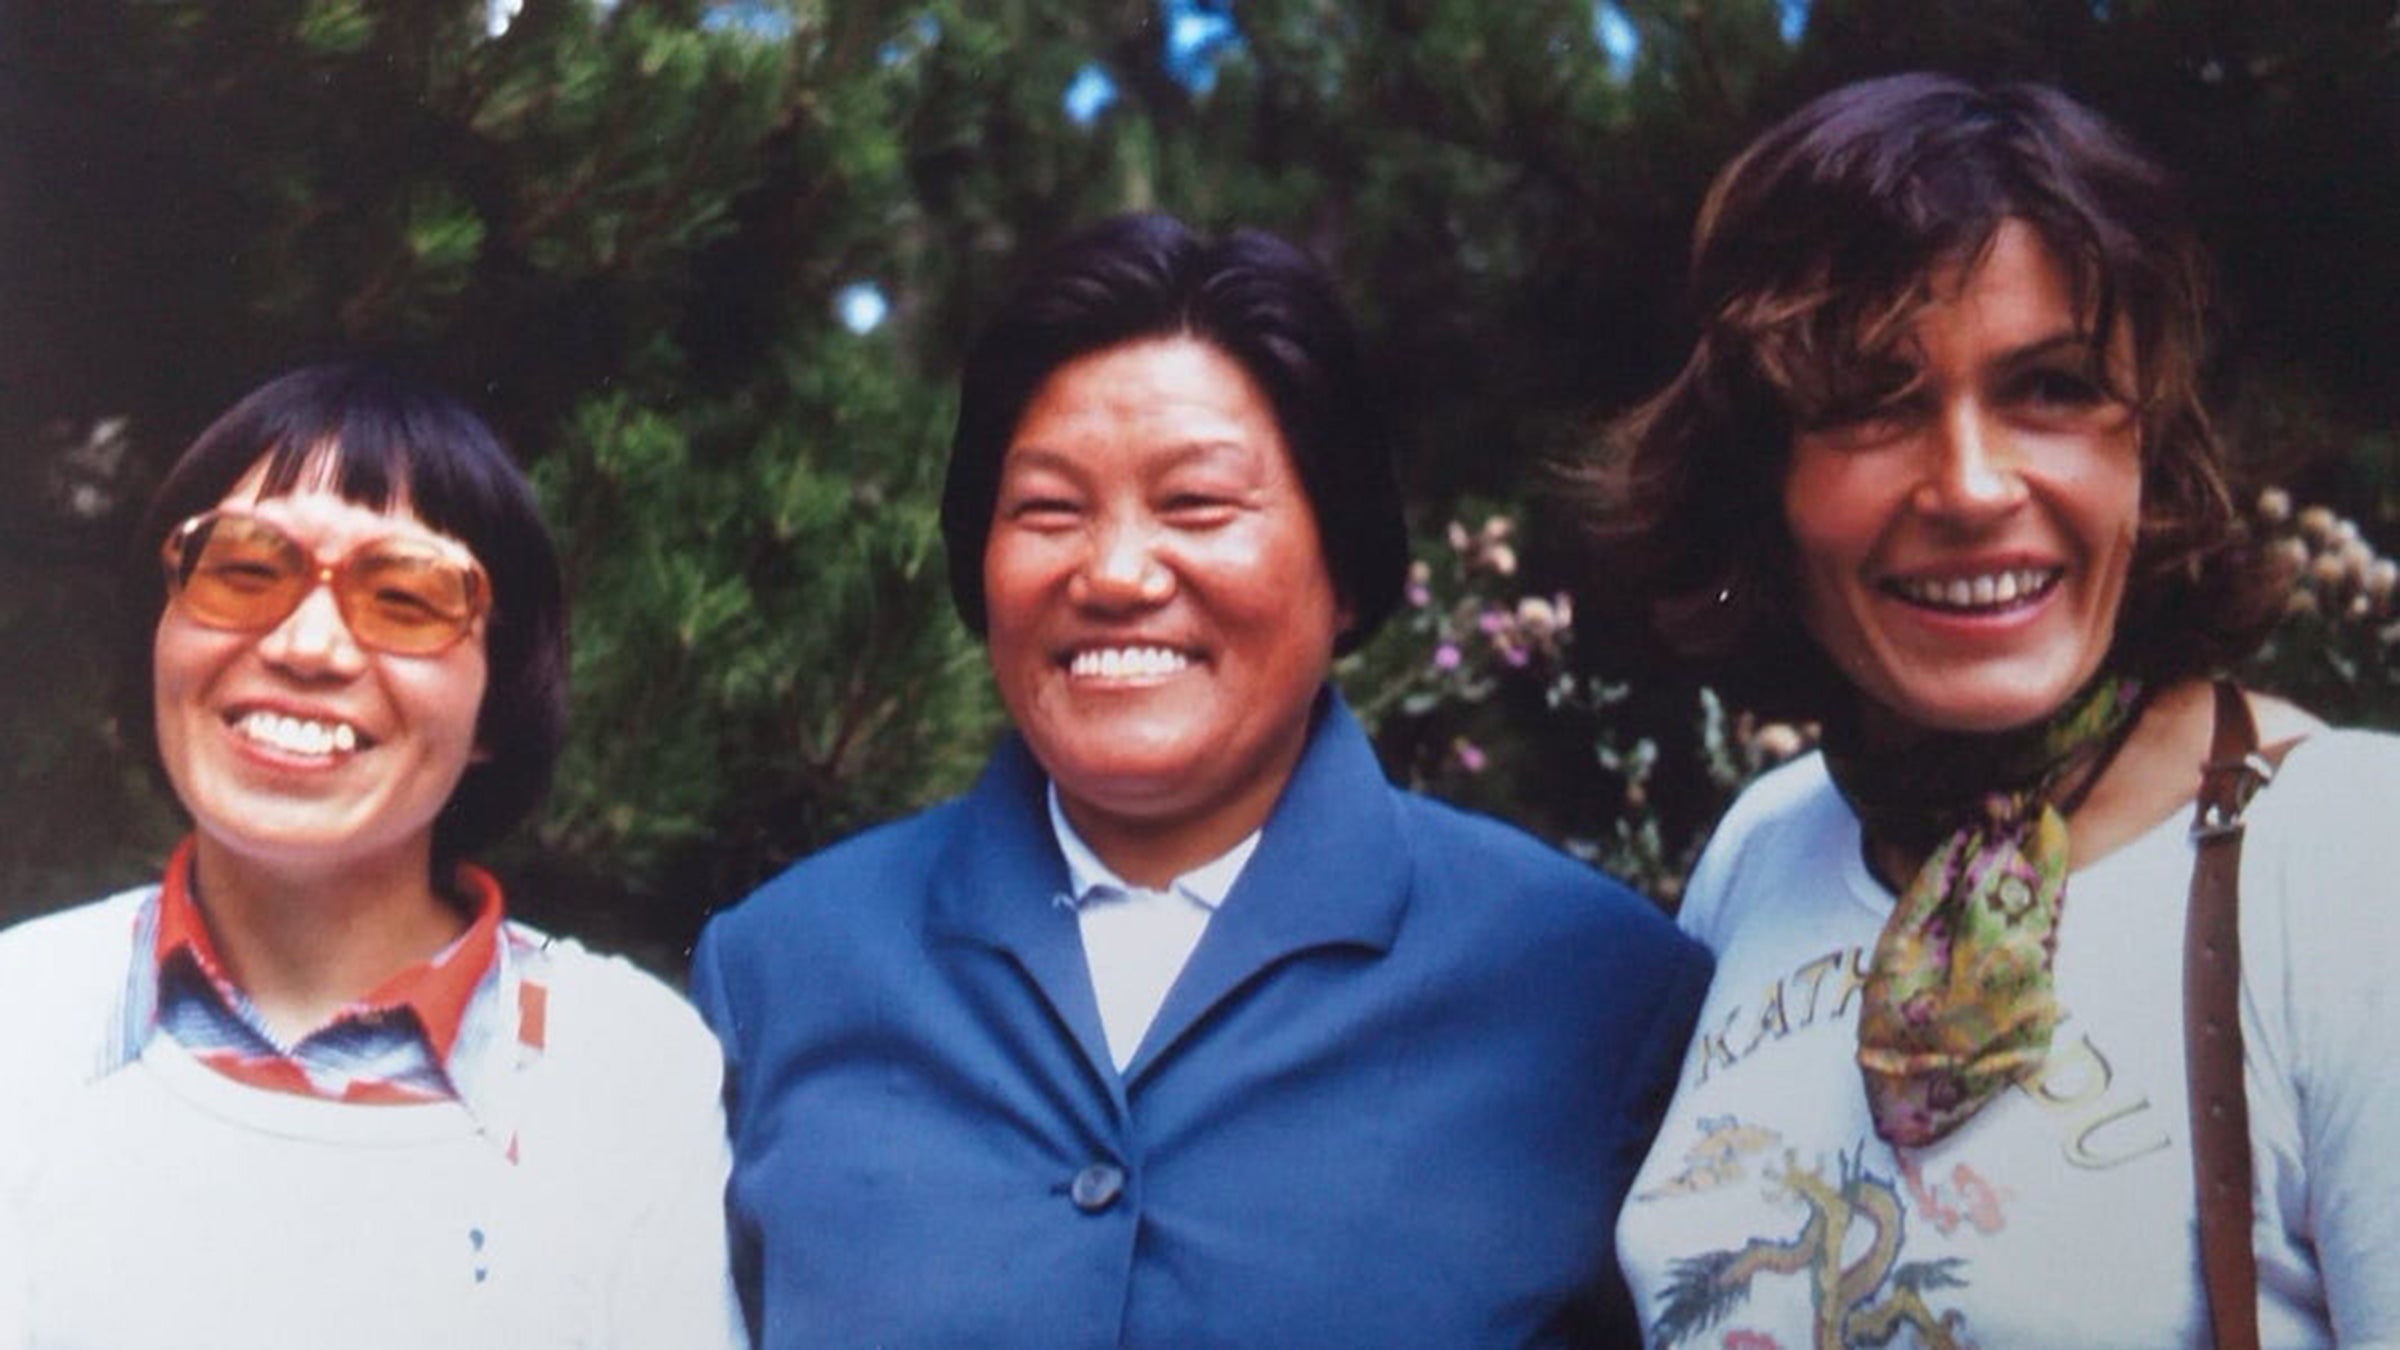 From left: Junko Tabei of Japan, Phanthog of Tibet, and Wanda Rutkiewicz of Poland